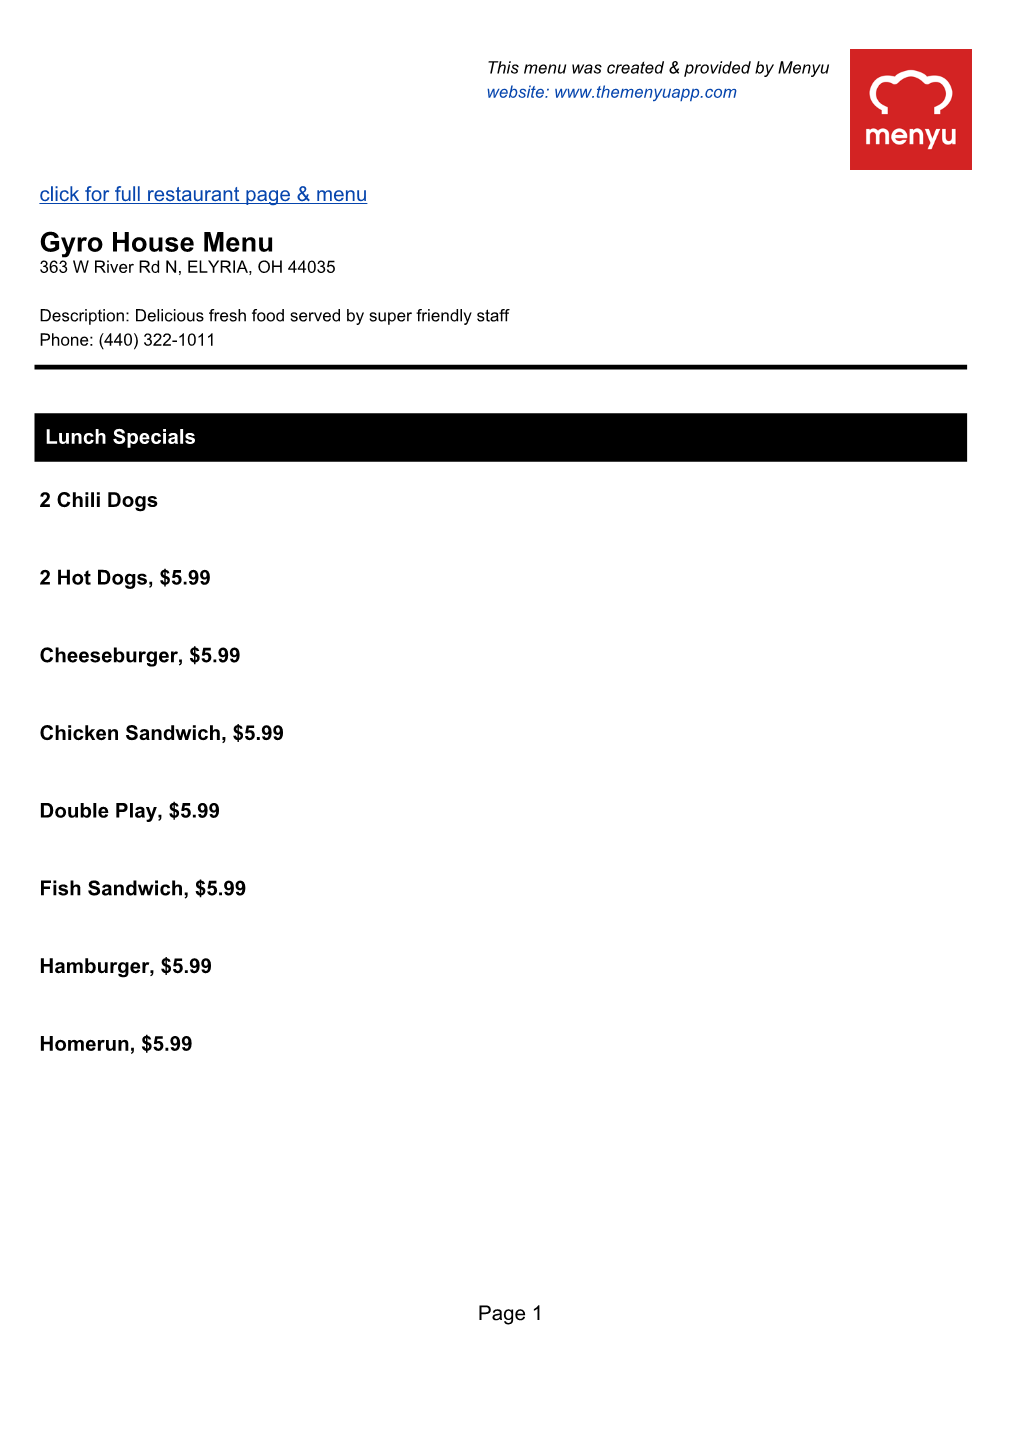 Gyro House Menu 363 W River Rd N, ELYRIA, OH 44035